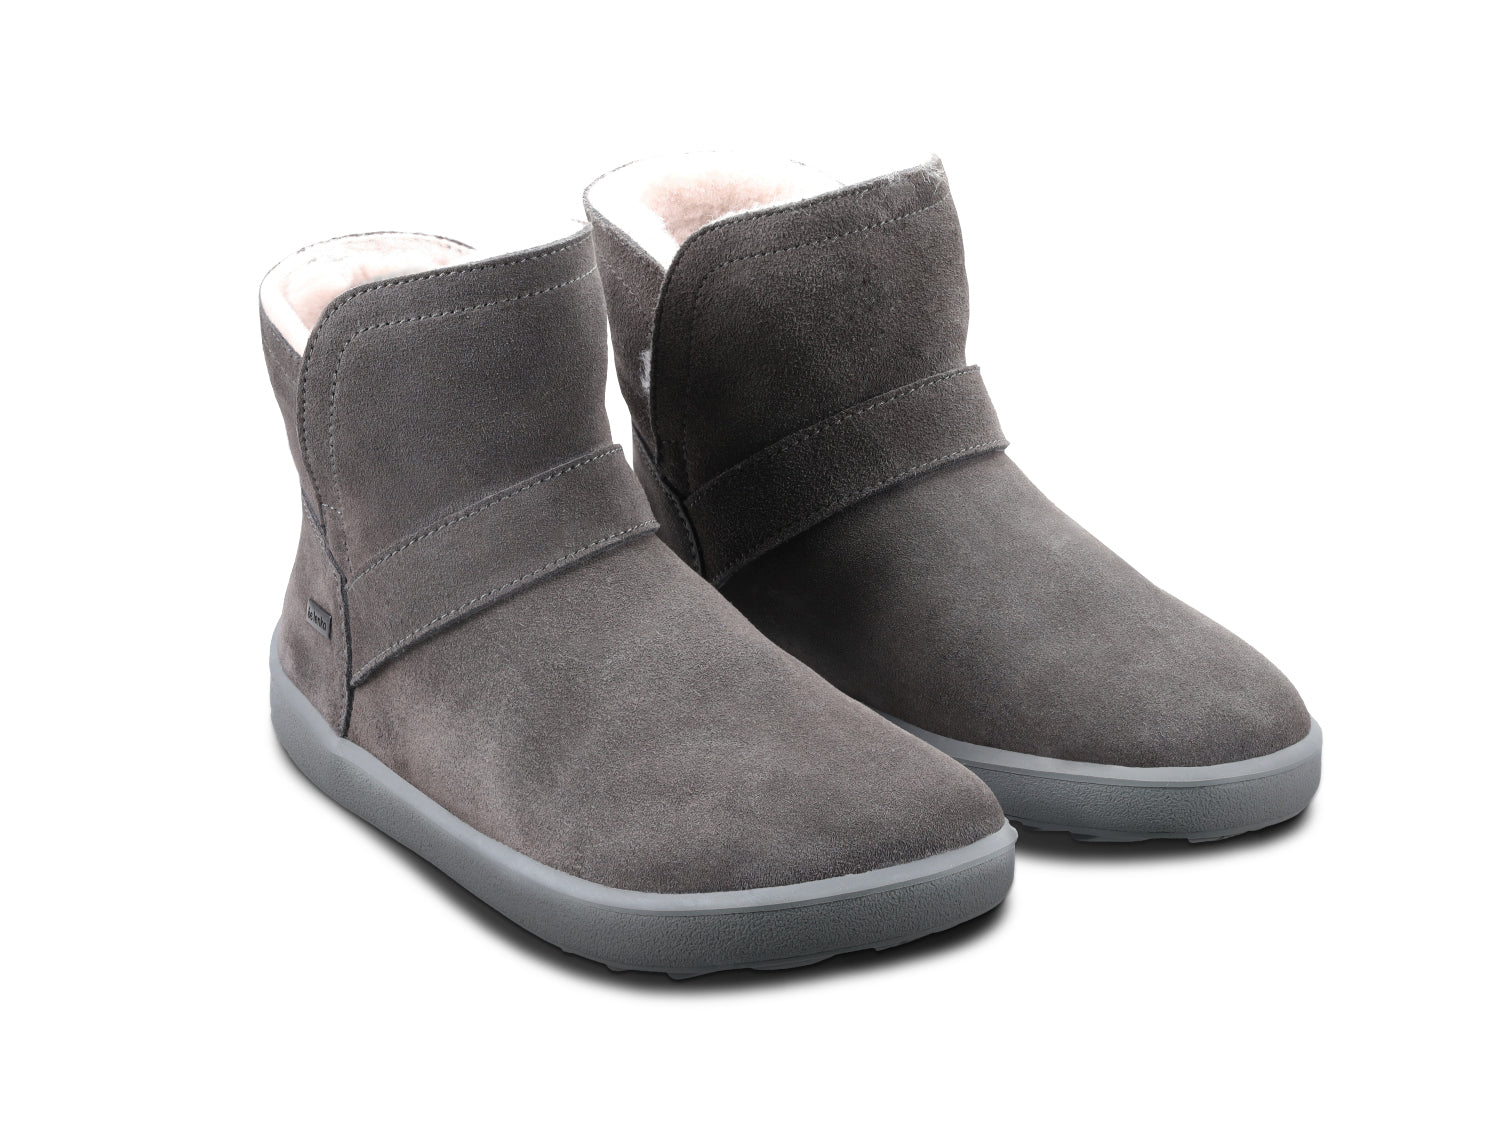 Barefoot Shoes Be Lenka Polaris - All Grey-Be Lenka-Cacles Barefoot